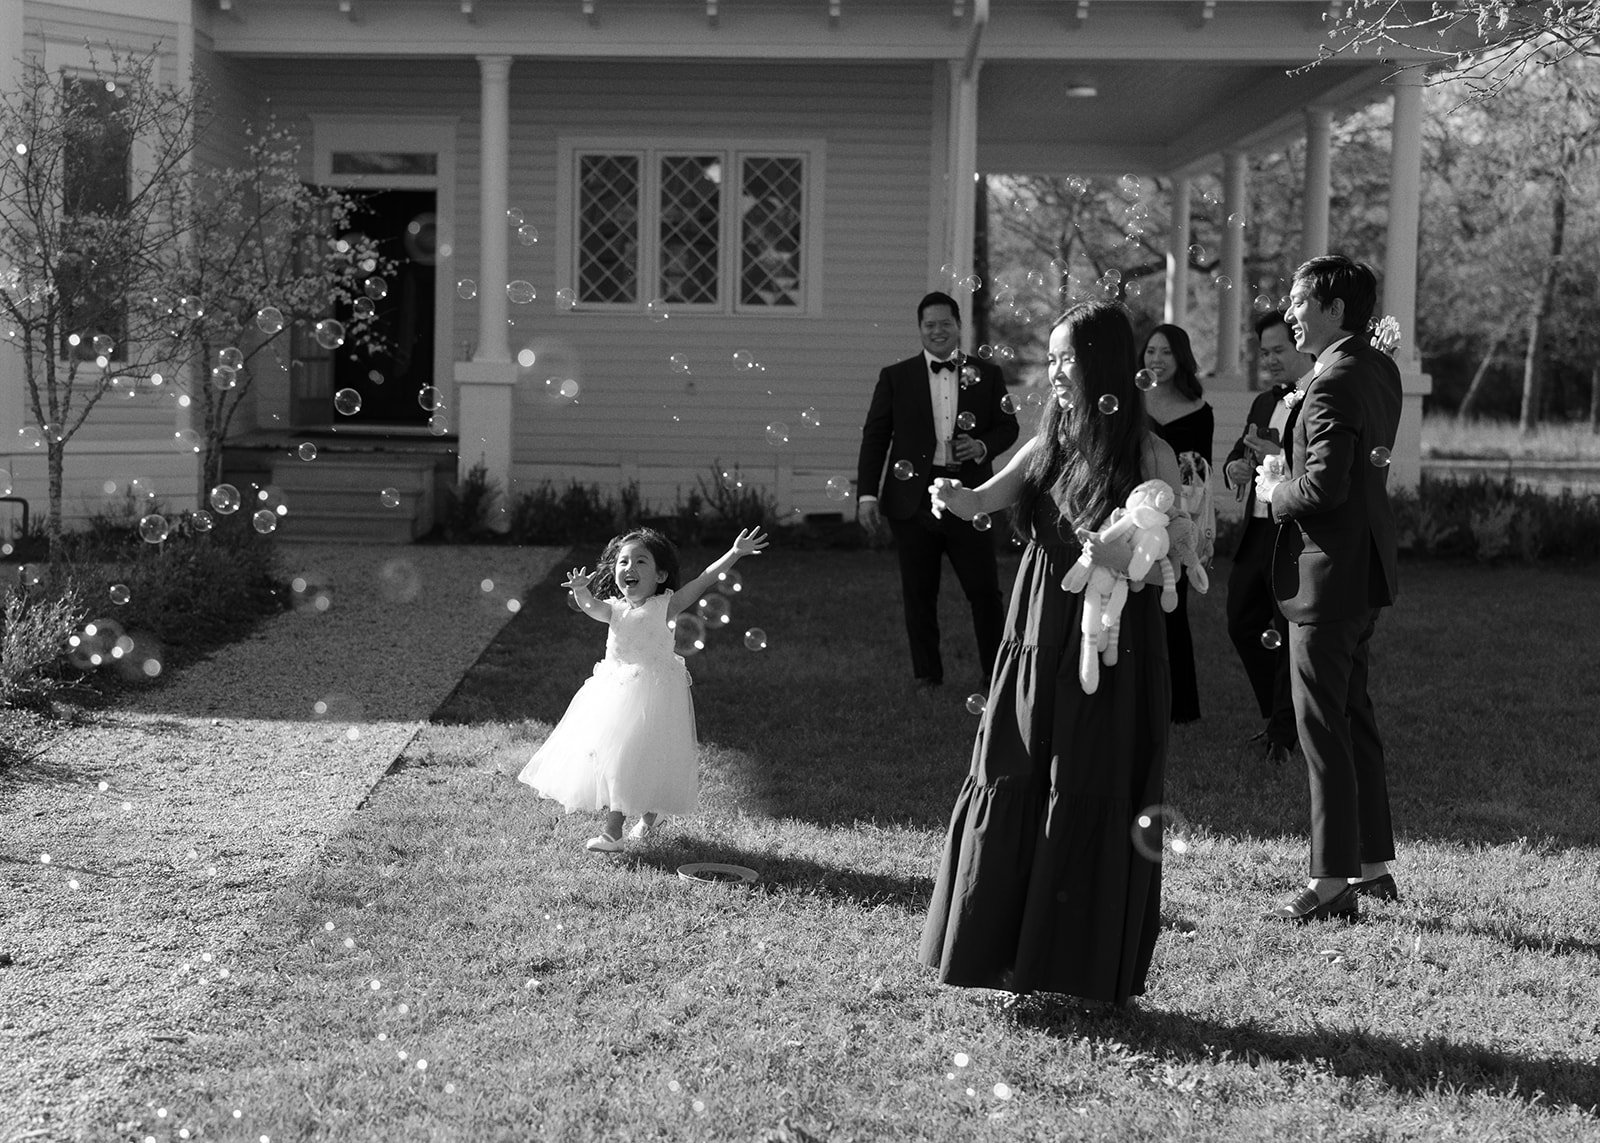 Best-Austin-Wedding-Photographers-Elopement-Film-35mm-Asheville-Santa-Barbara-Grand-Lady-91.jpg